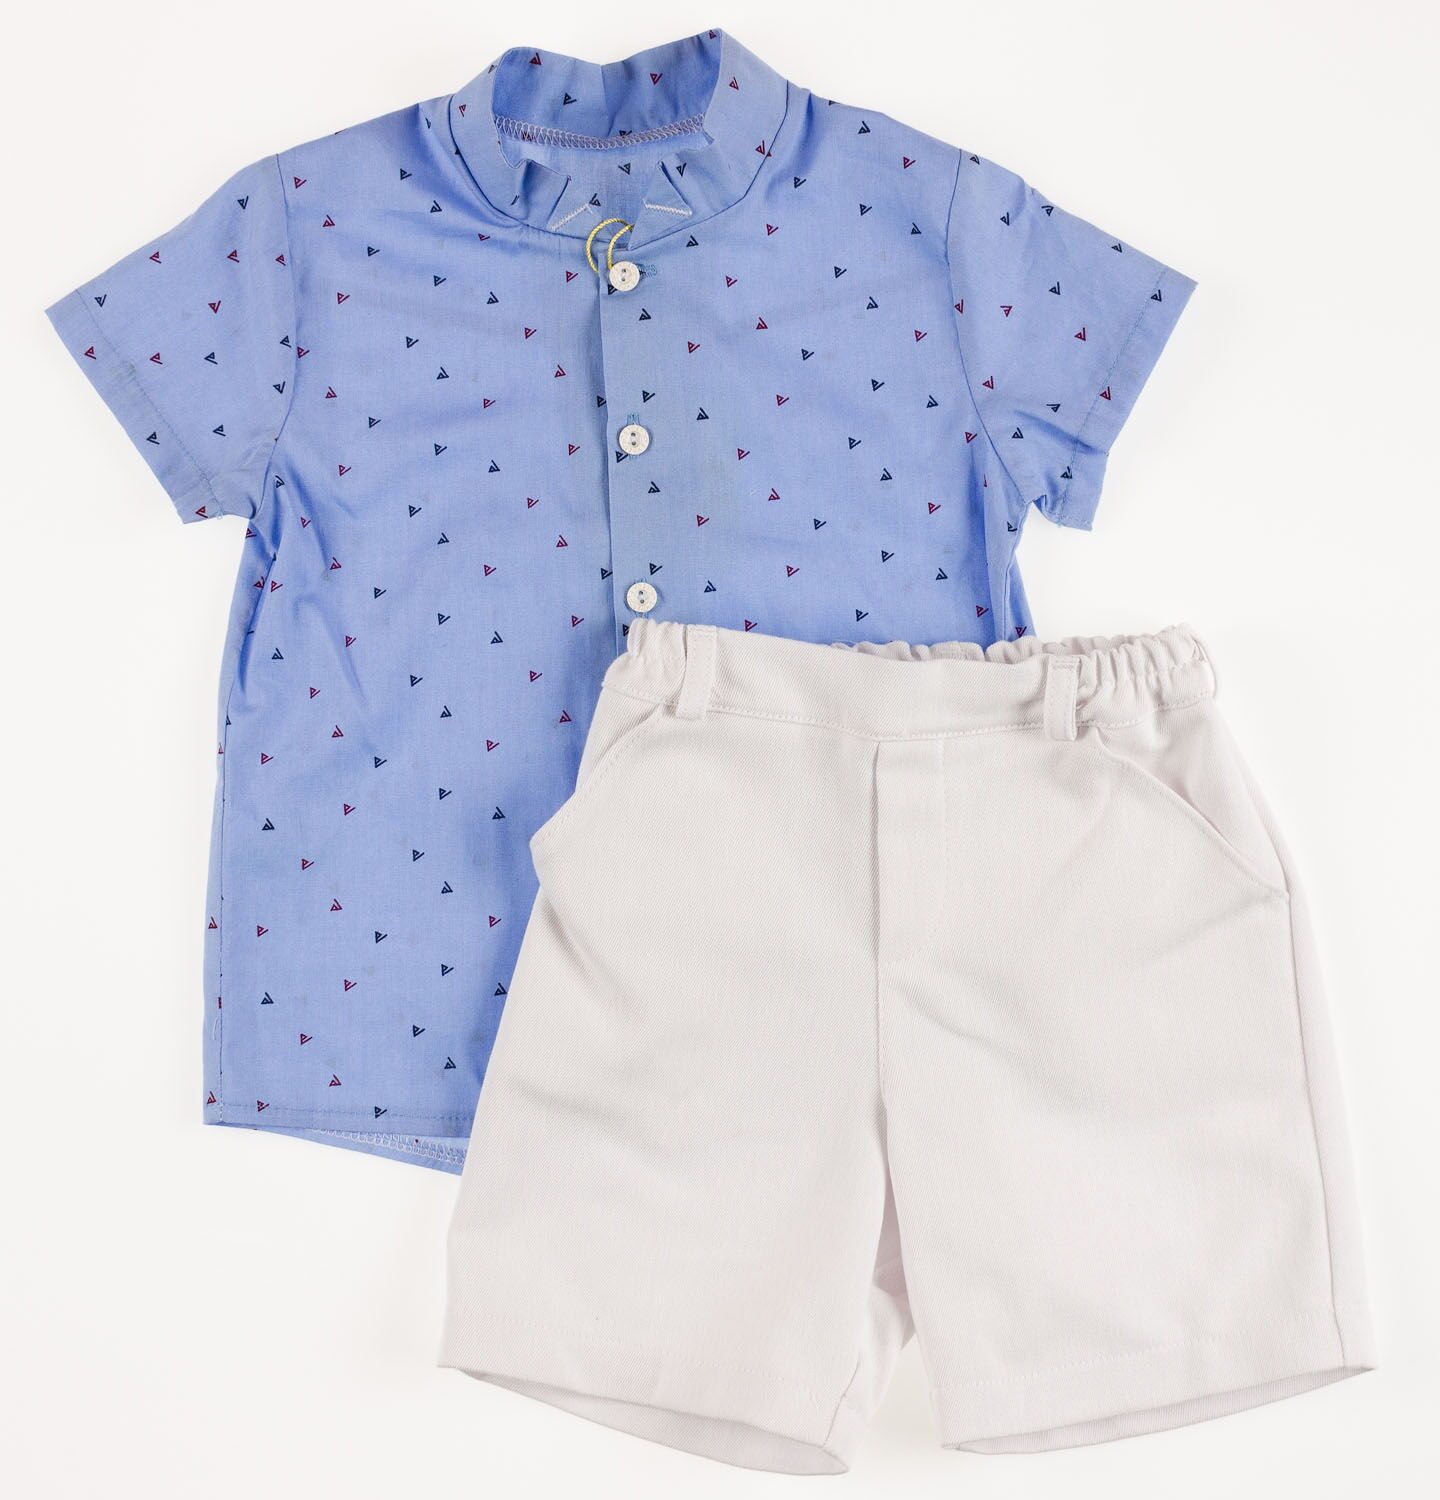 Комплект для мальчика (рубашка+шорты) Маленьке сонечко СТИВЕН голубой - цена